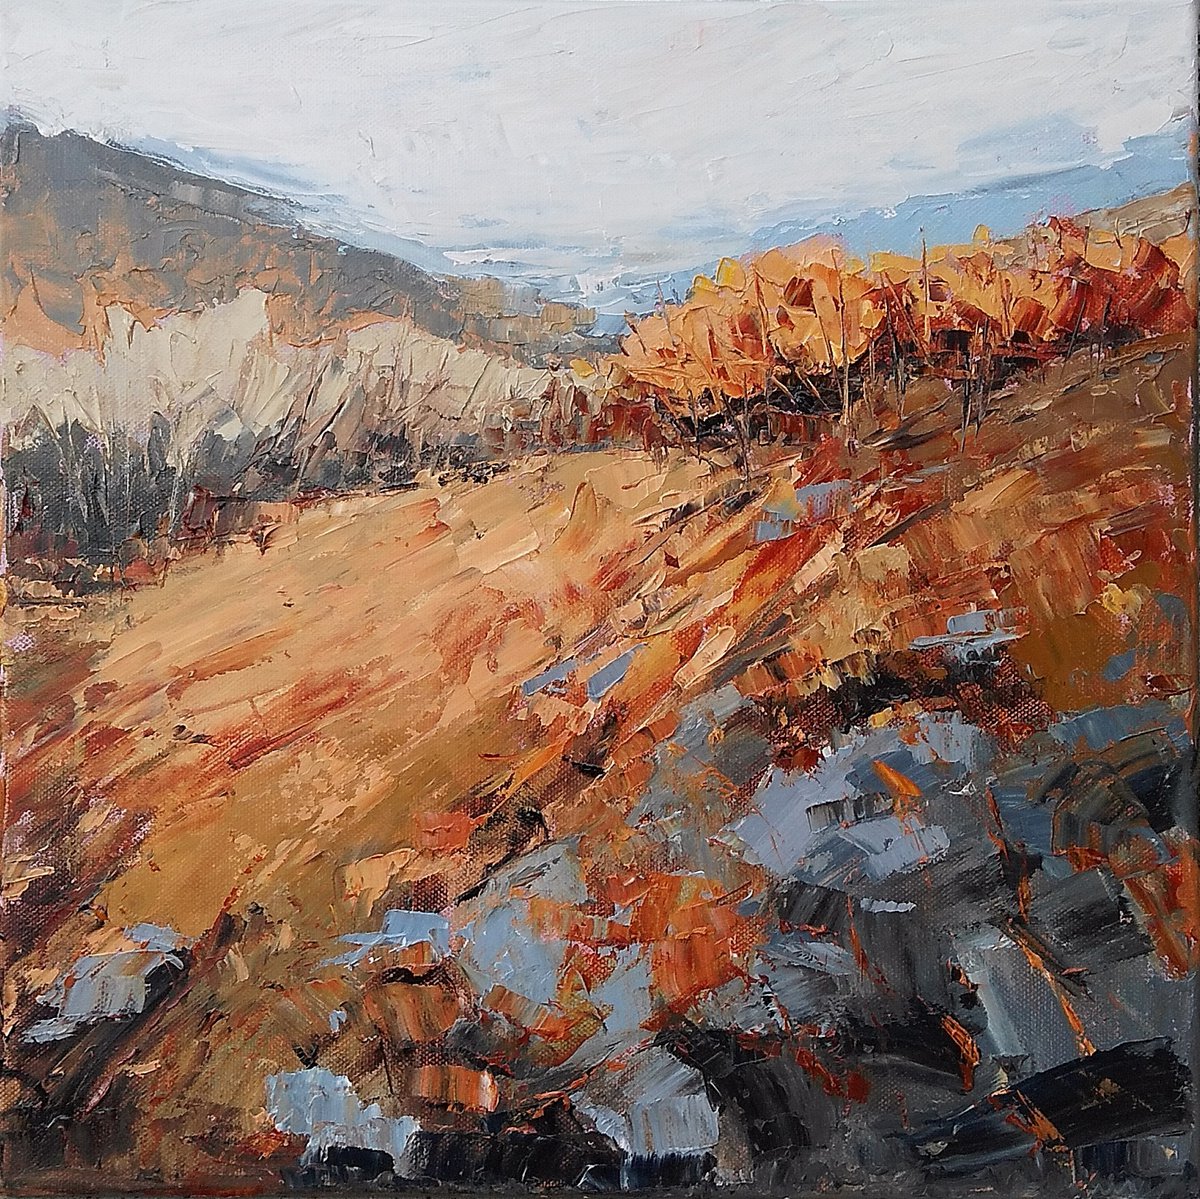 October golden air, 40x40cm, autumn hills landscape by Emilia Milcheva